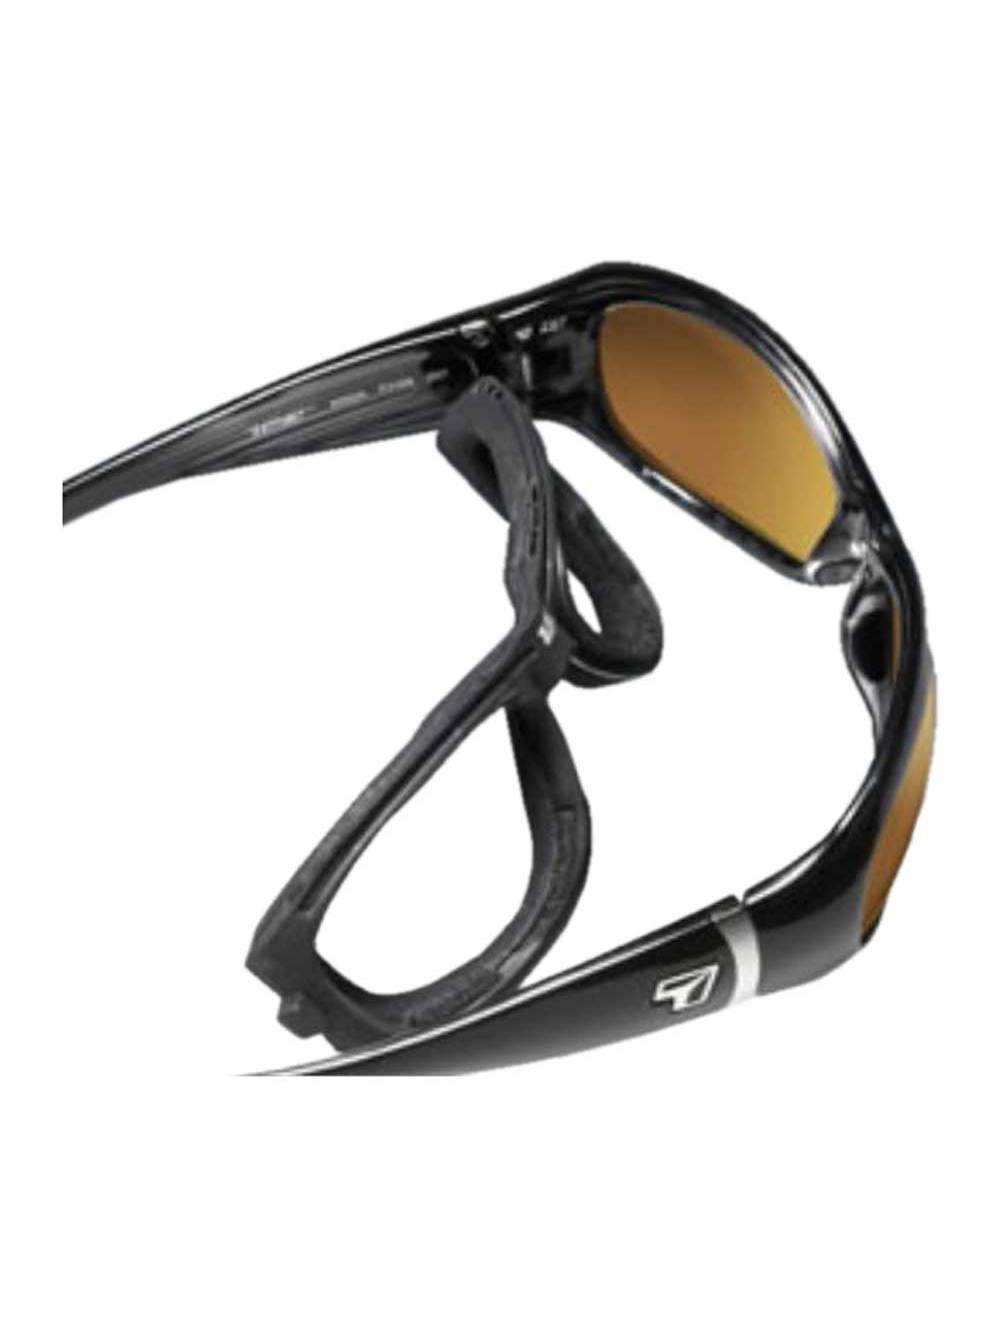 Viento AirShield Sunglasses,Glossy Black Frame,SharpVIew Gray Lens,S-M 150 - image 3 of 4